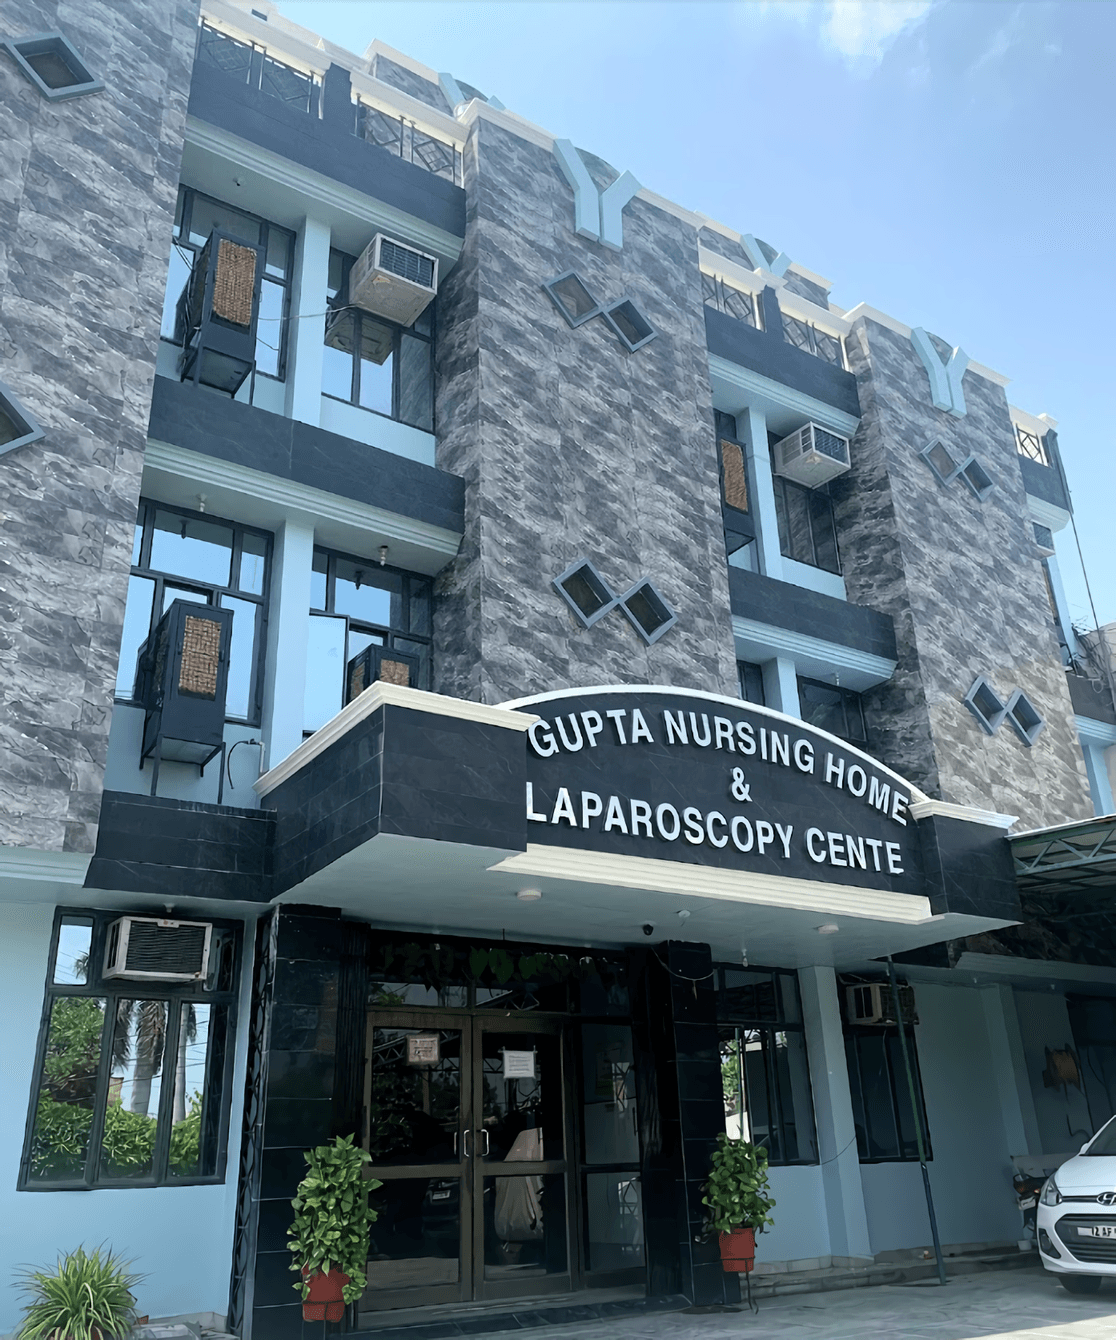 Gupta Nursing Home & Laparoscopy Center